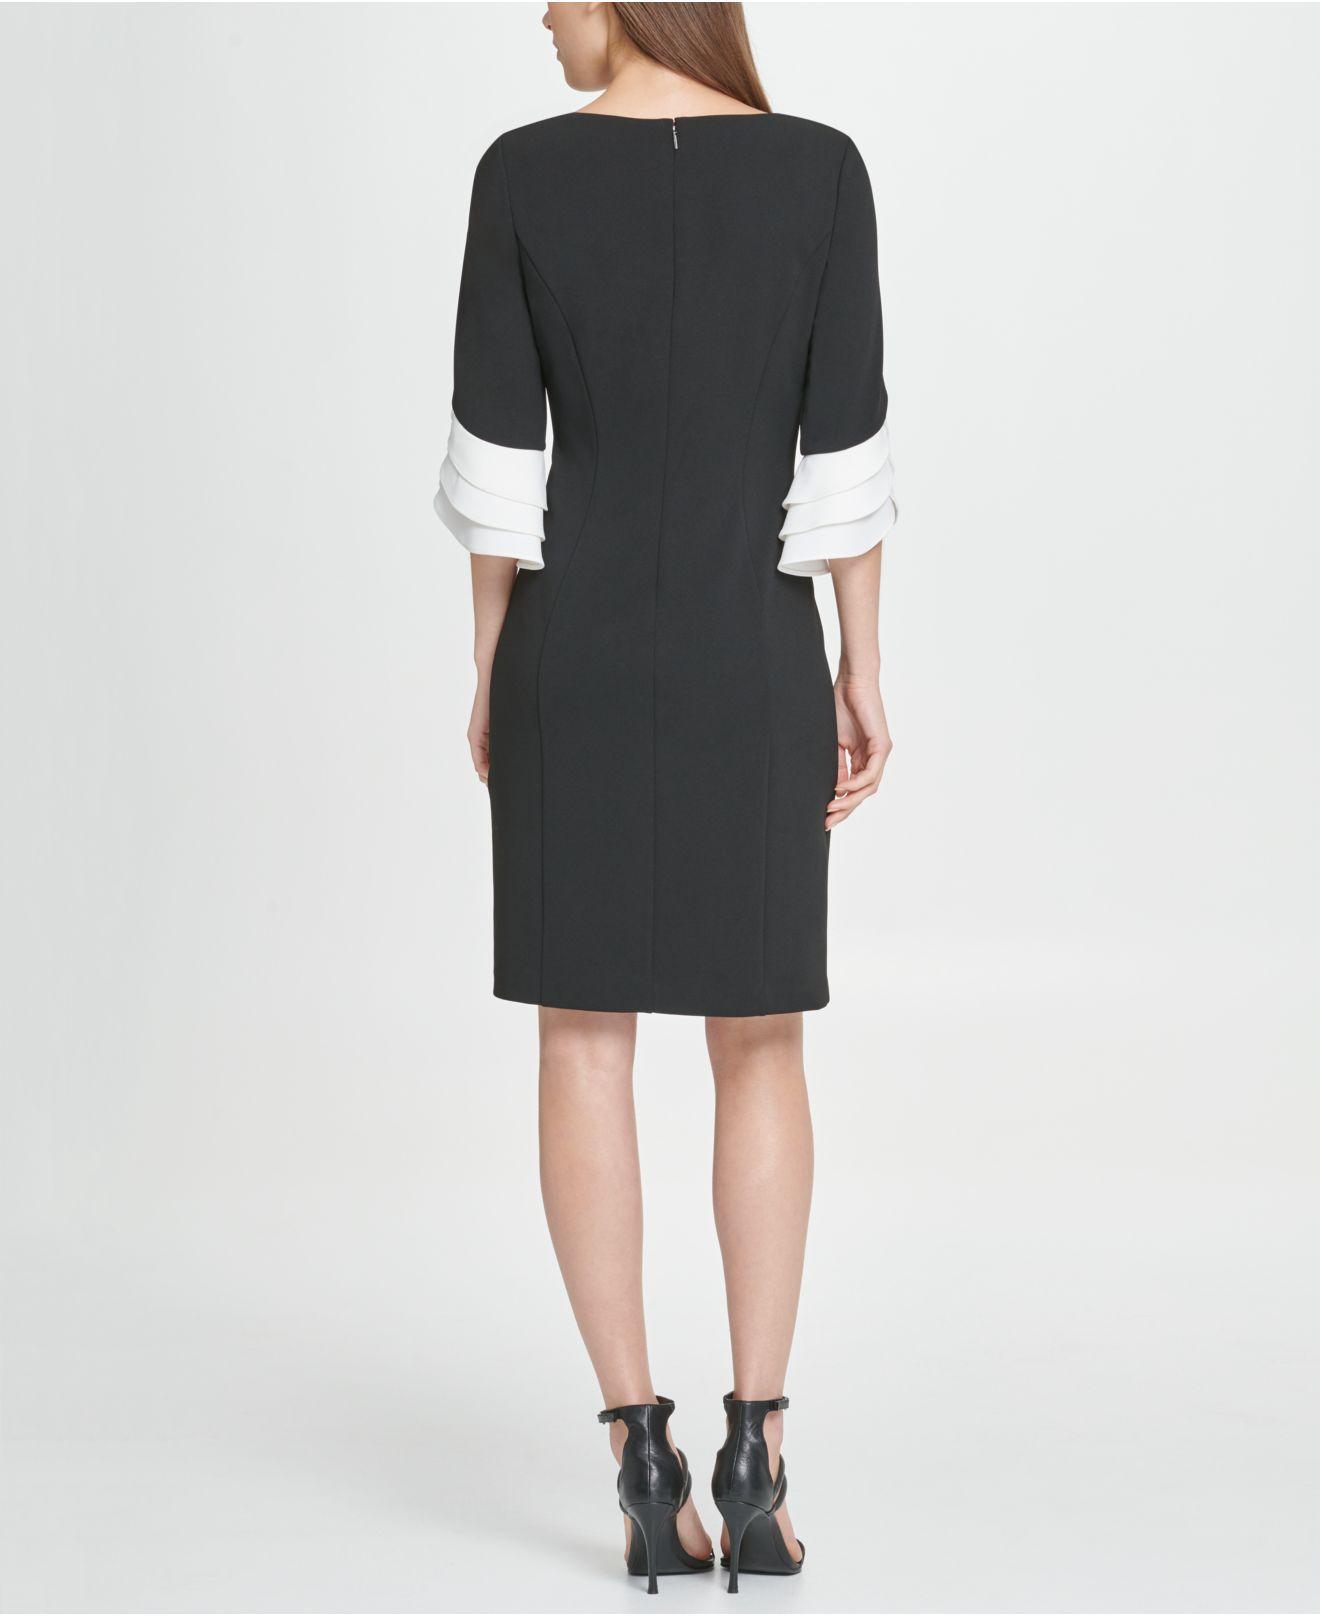 DKNY Synthetic Triple Ruffle Sleeve Sheath Dress in Black/Ivory 